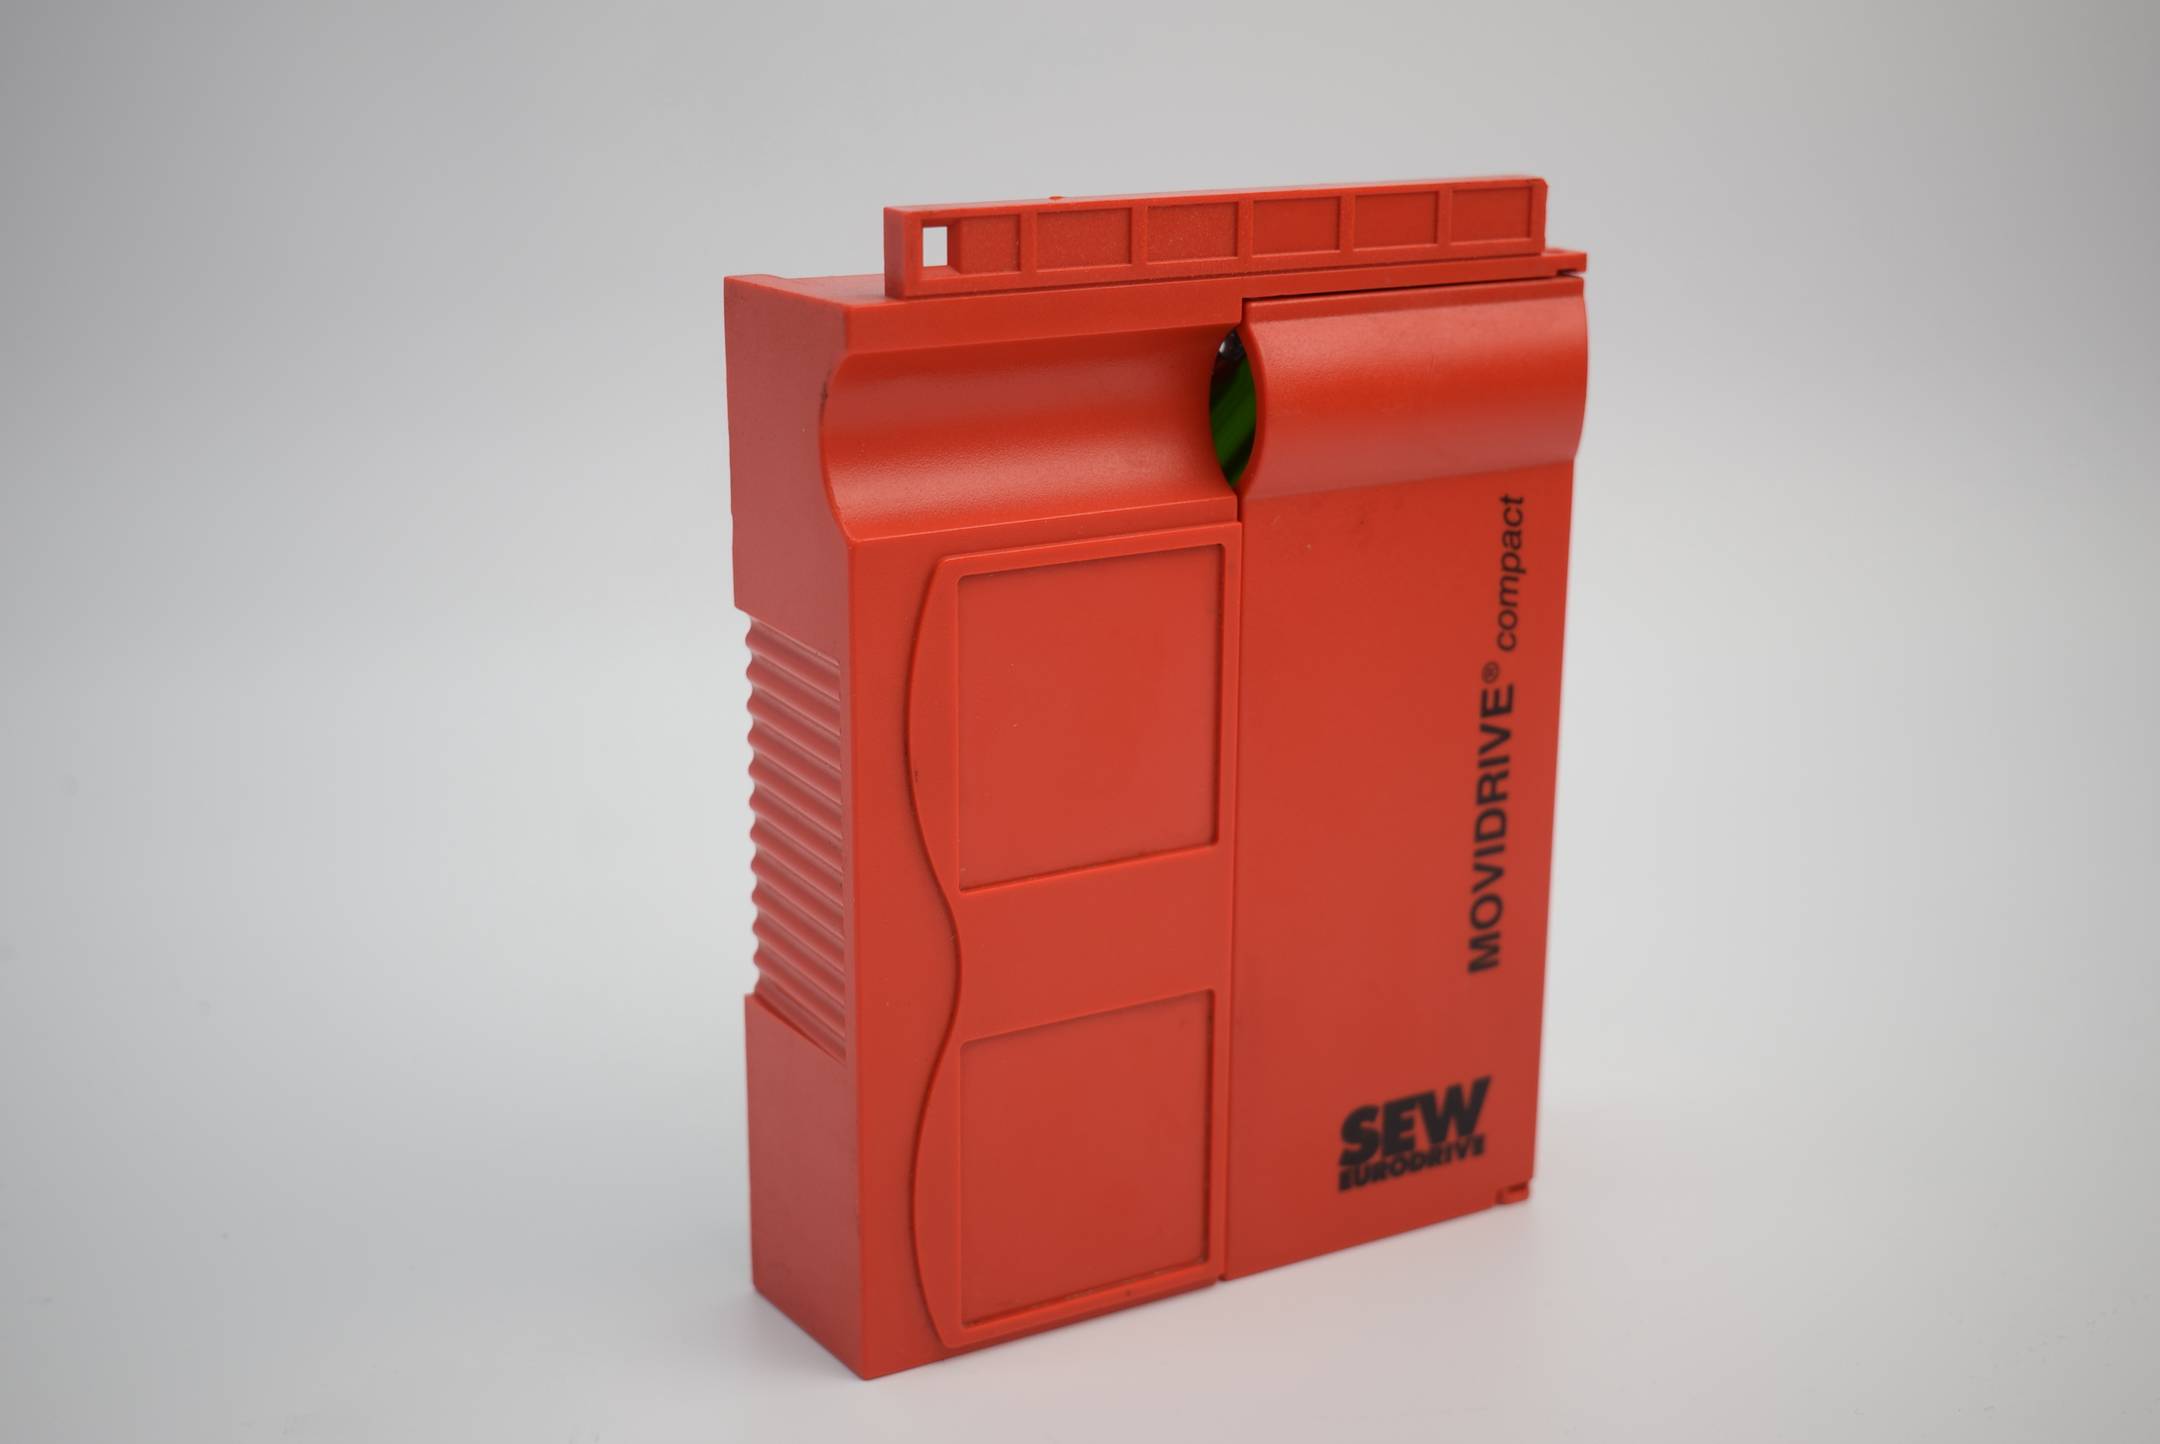 SEW Movidrive compact MCF40AX10